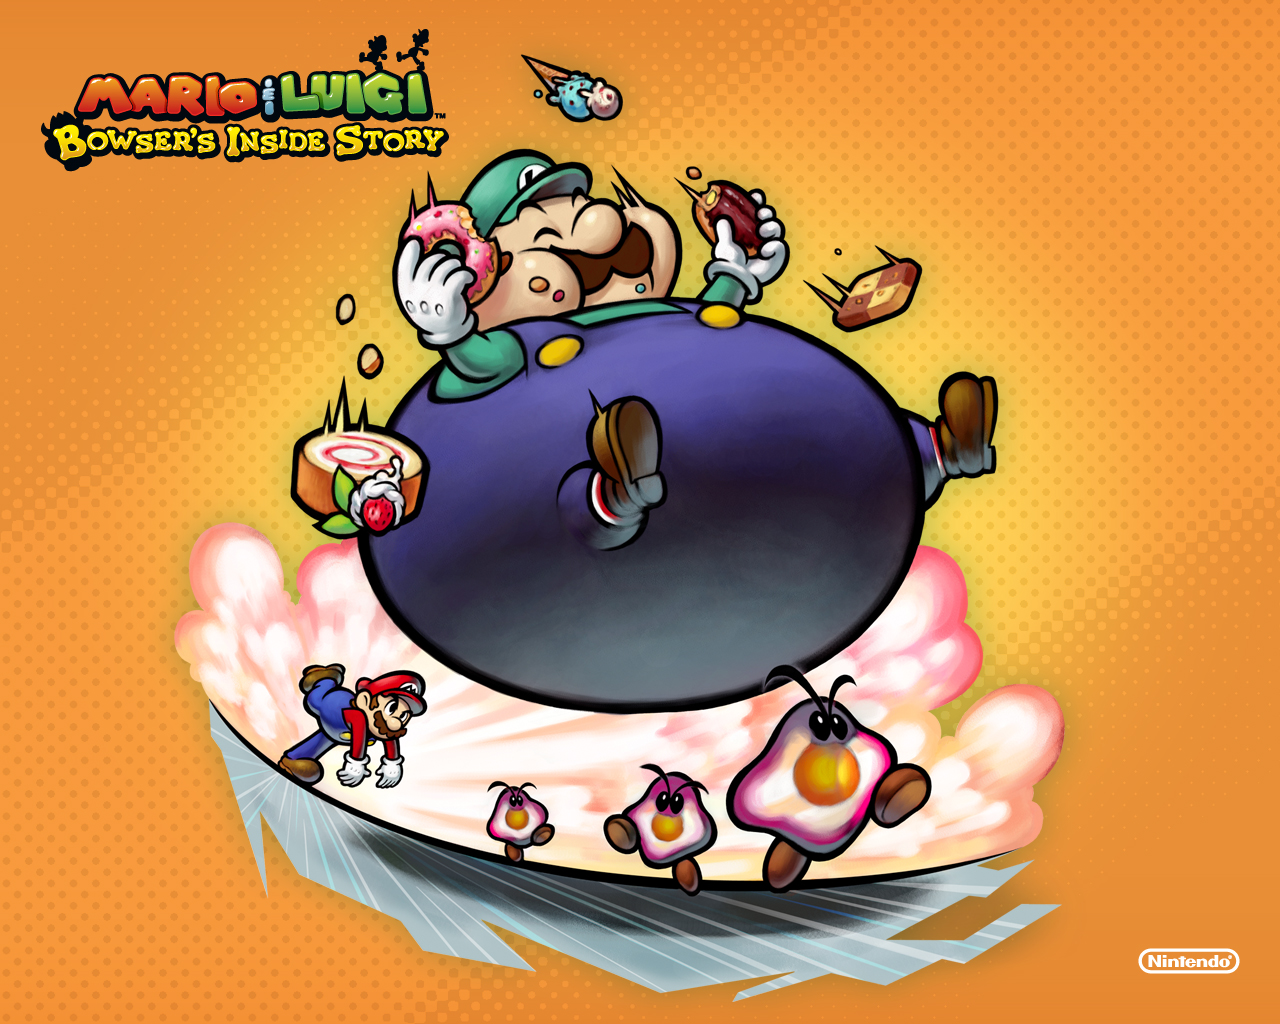 Mario & Luigi: Bowser's Inside Story Picture